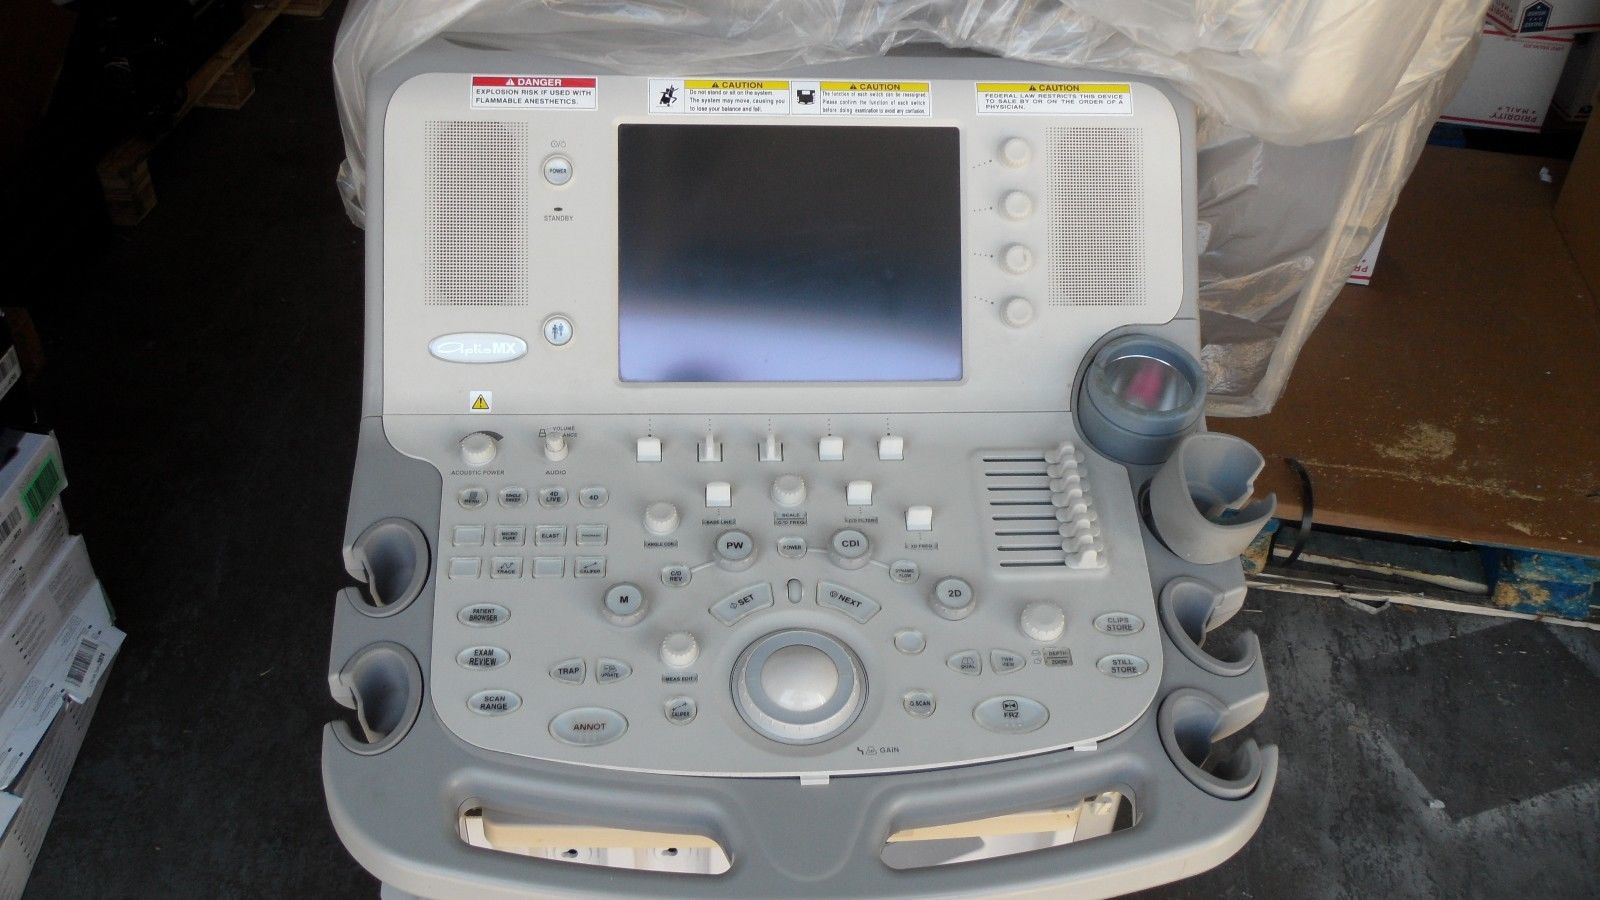 TOSHIBA SSA-780A (AplioMX) OB / GYN - Vascular Ultrasound DIAGNOSTIC ULTRASOUND MACHINES FOR SALE